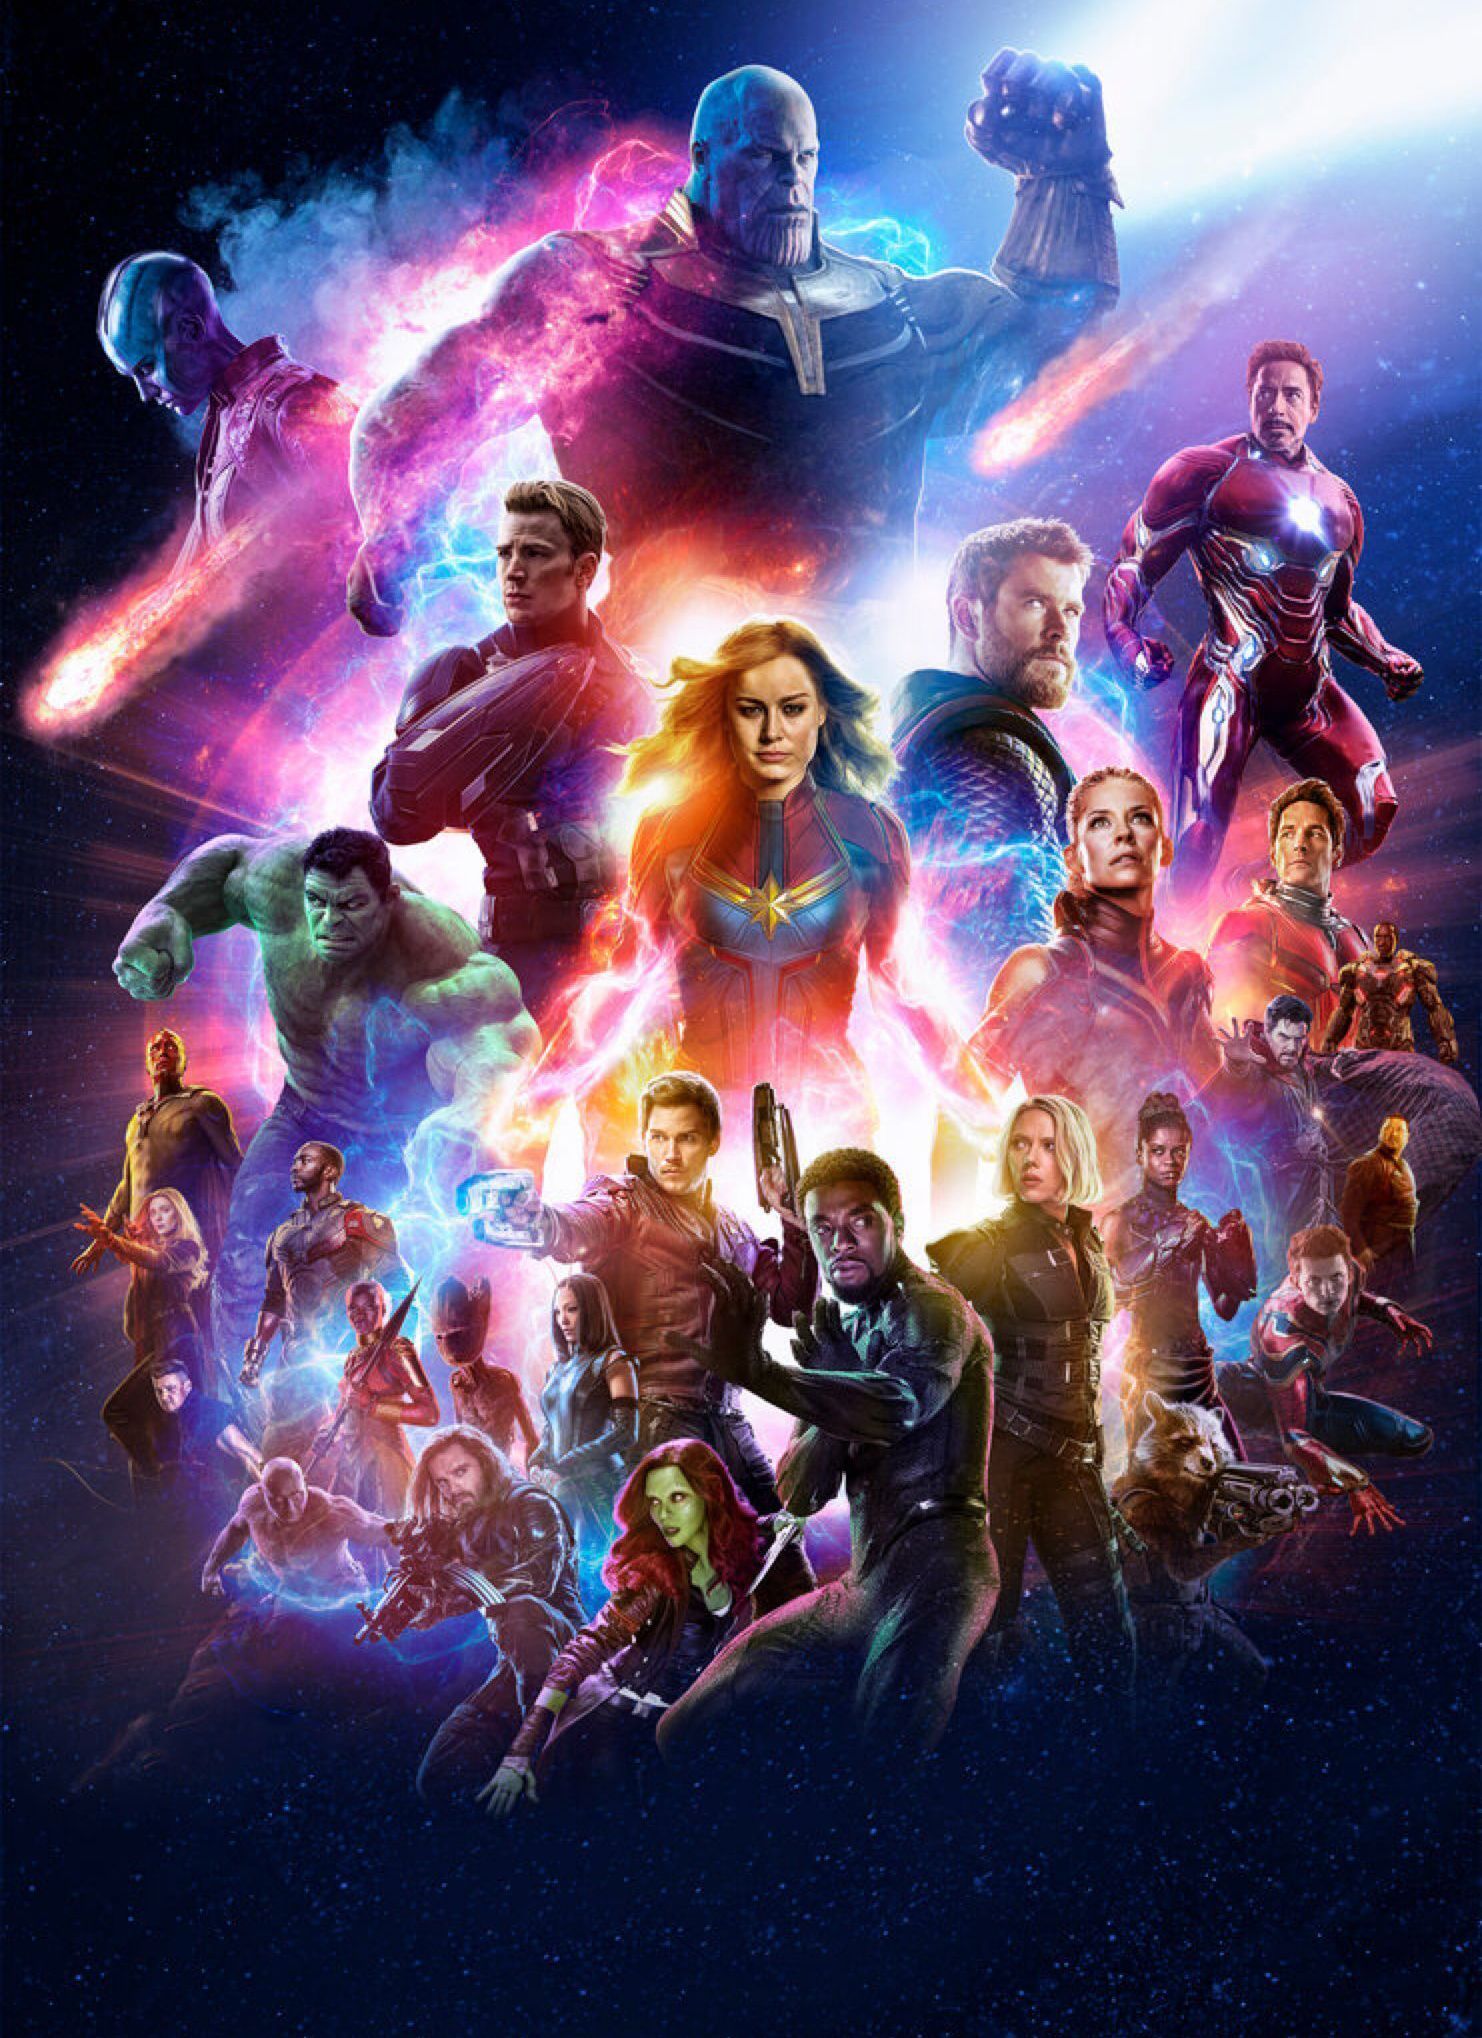 Avengers End game thanos thor hulk angry movie mobile wallpaper #movie #avengers #Game #thanos #Thor #hulk #angry. Avengers picture, Avengers wallpaper, Avengers